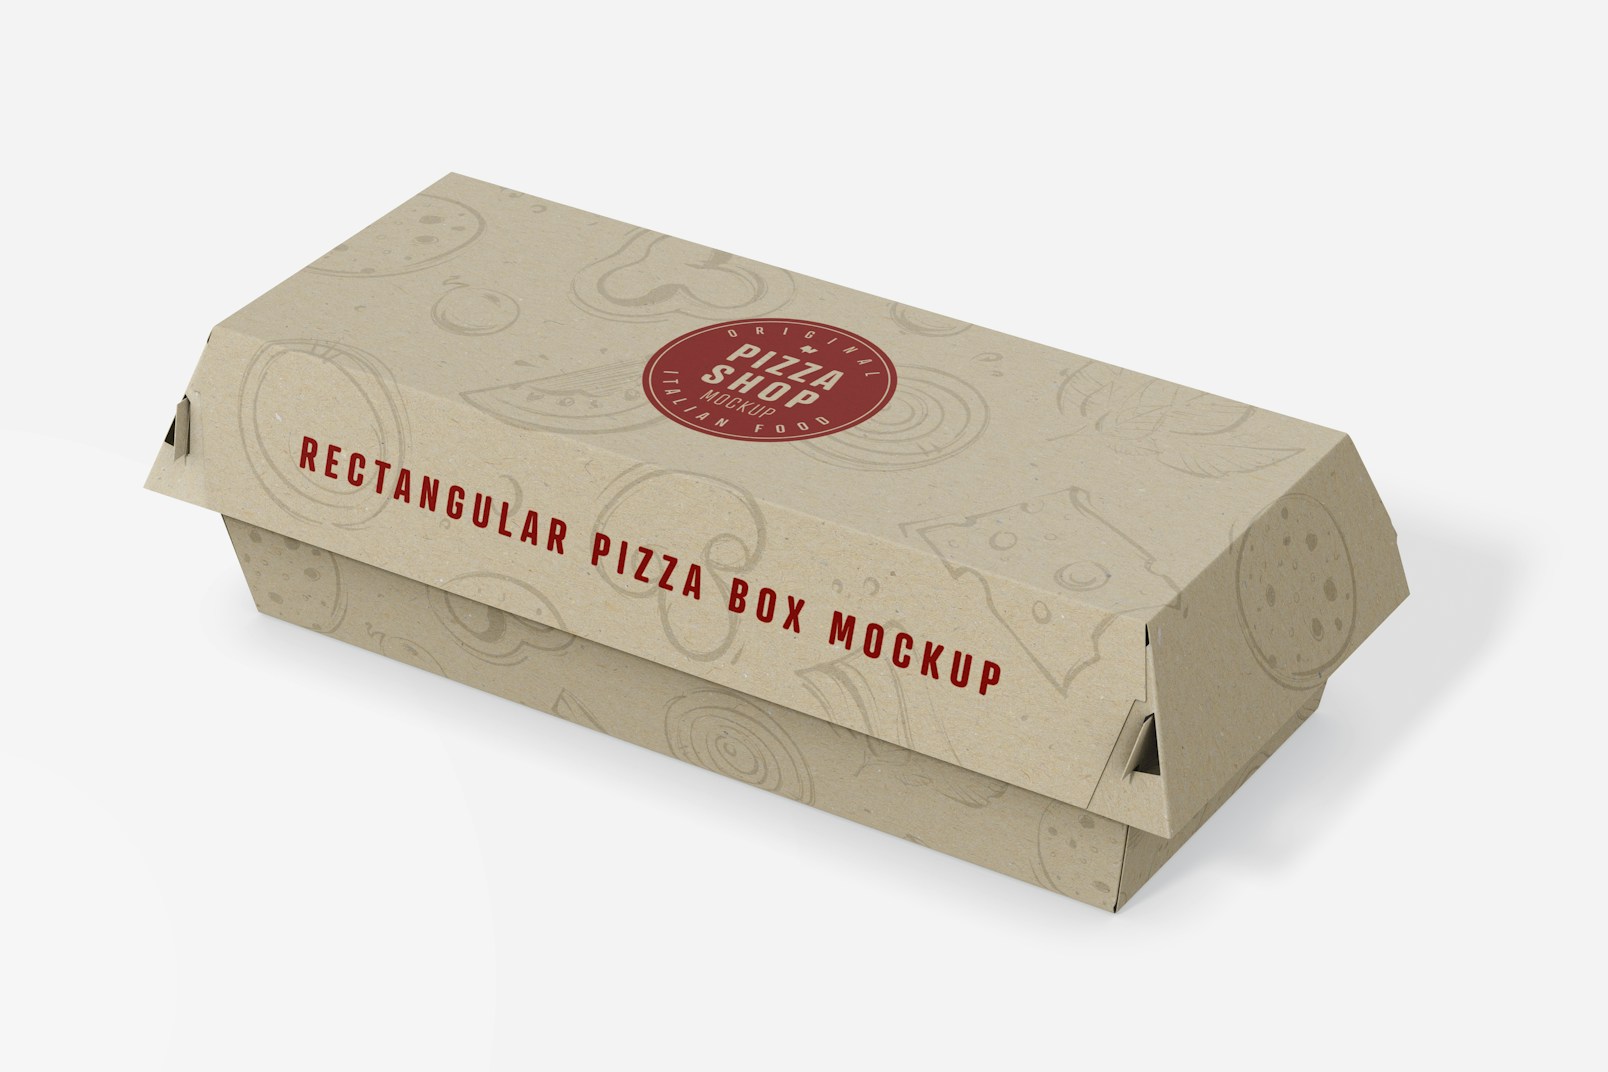 Rectangular Pizza Box Mockup, Perspective